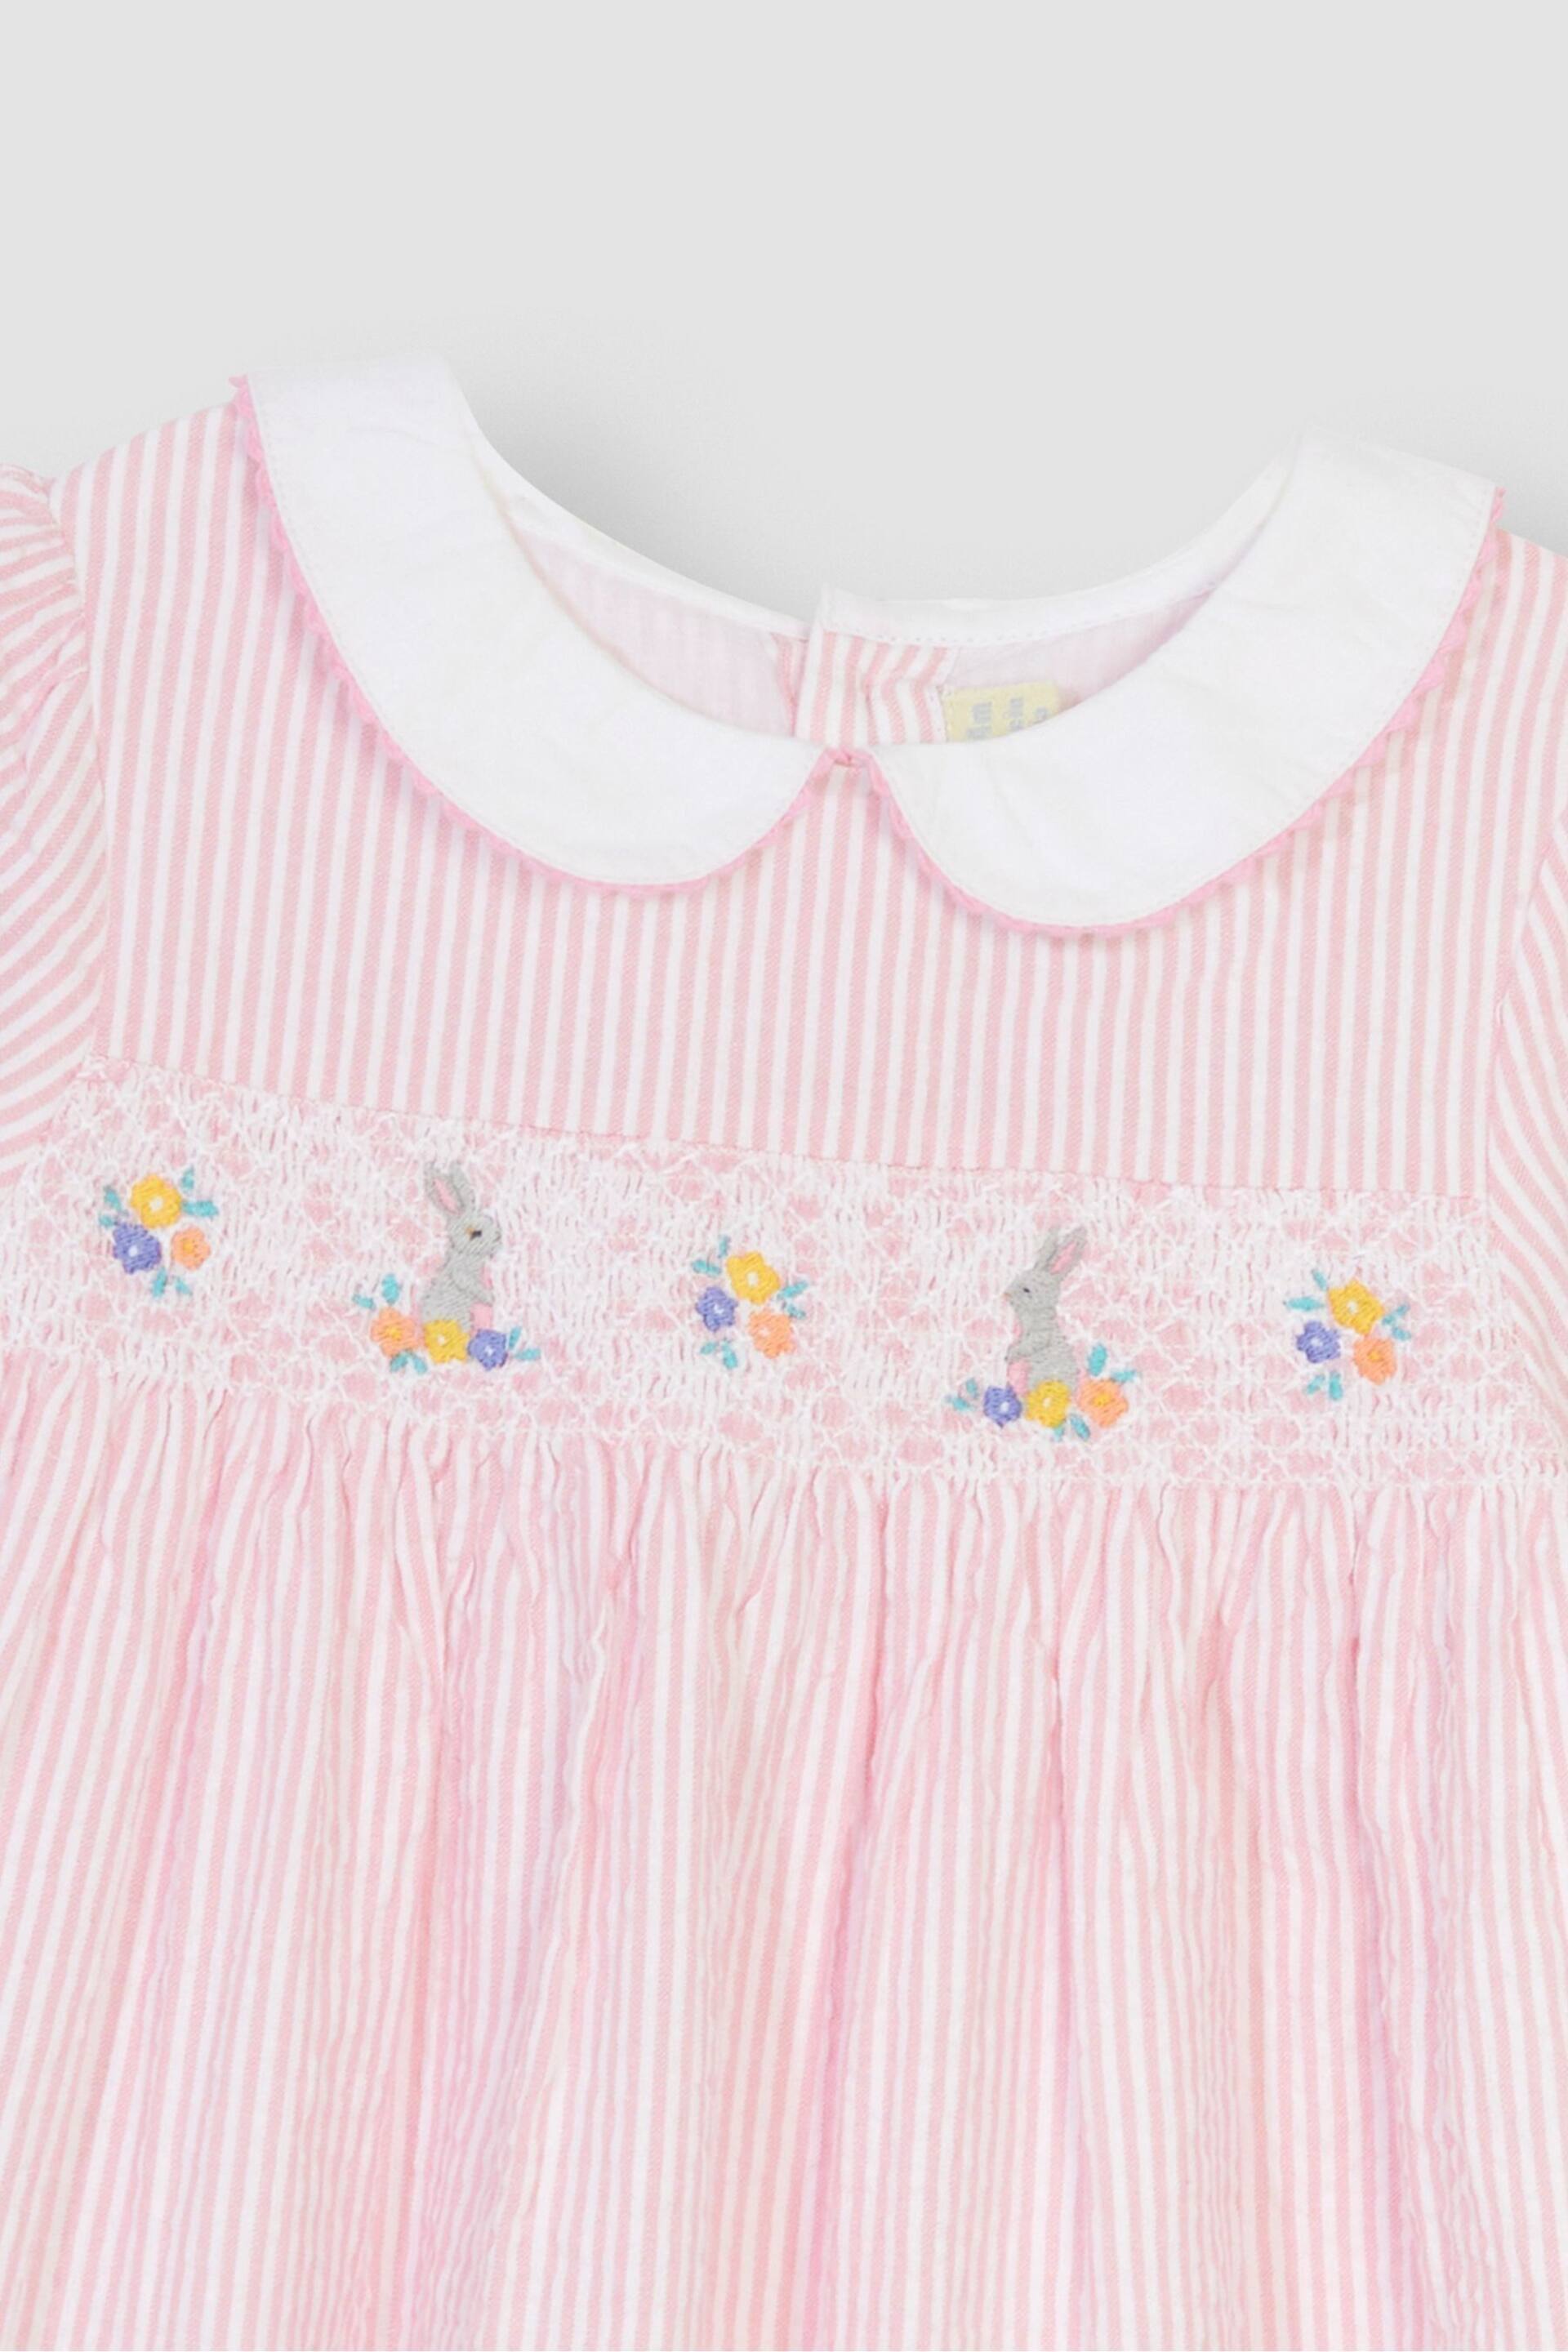 JoJo Maman Bébé Pink Bunny Embroidered Smocked Dress - Image 4 of 4